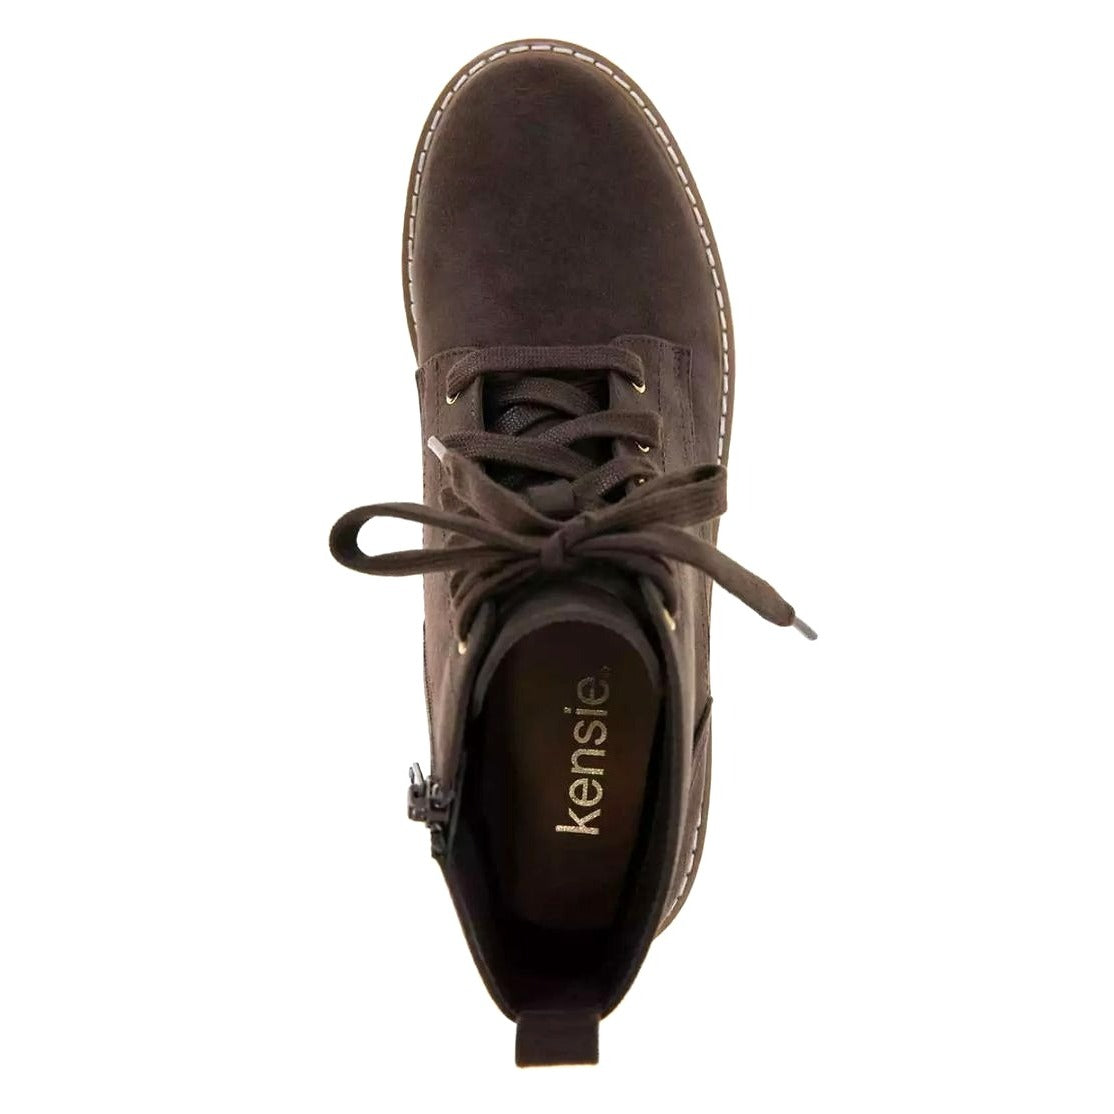 Kensie Boots Kasha Combat Lace Up Zip Vegan Suede Chunky Lug Platform Shoes